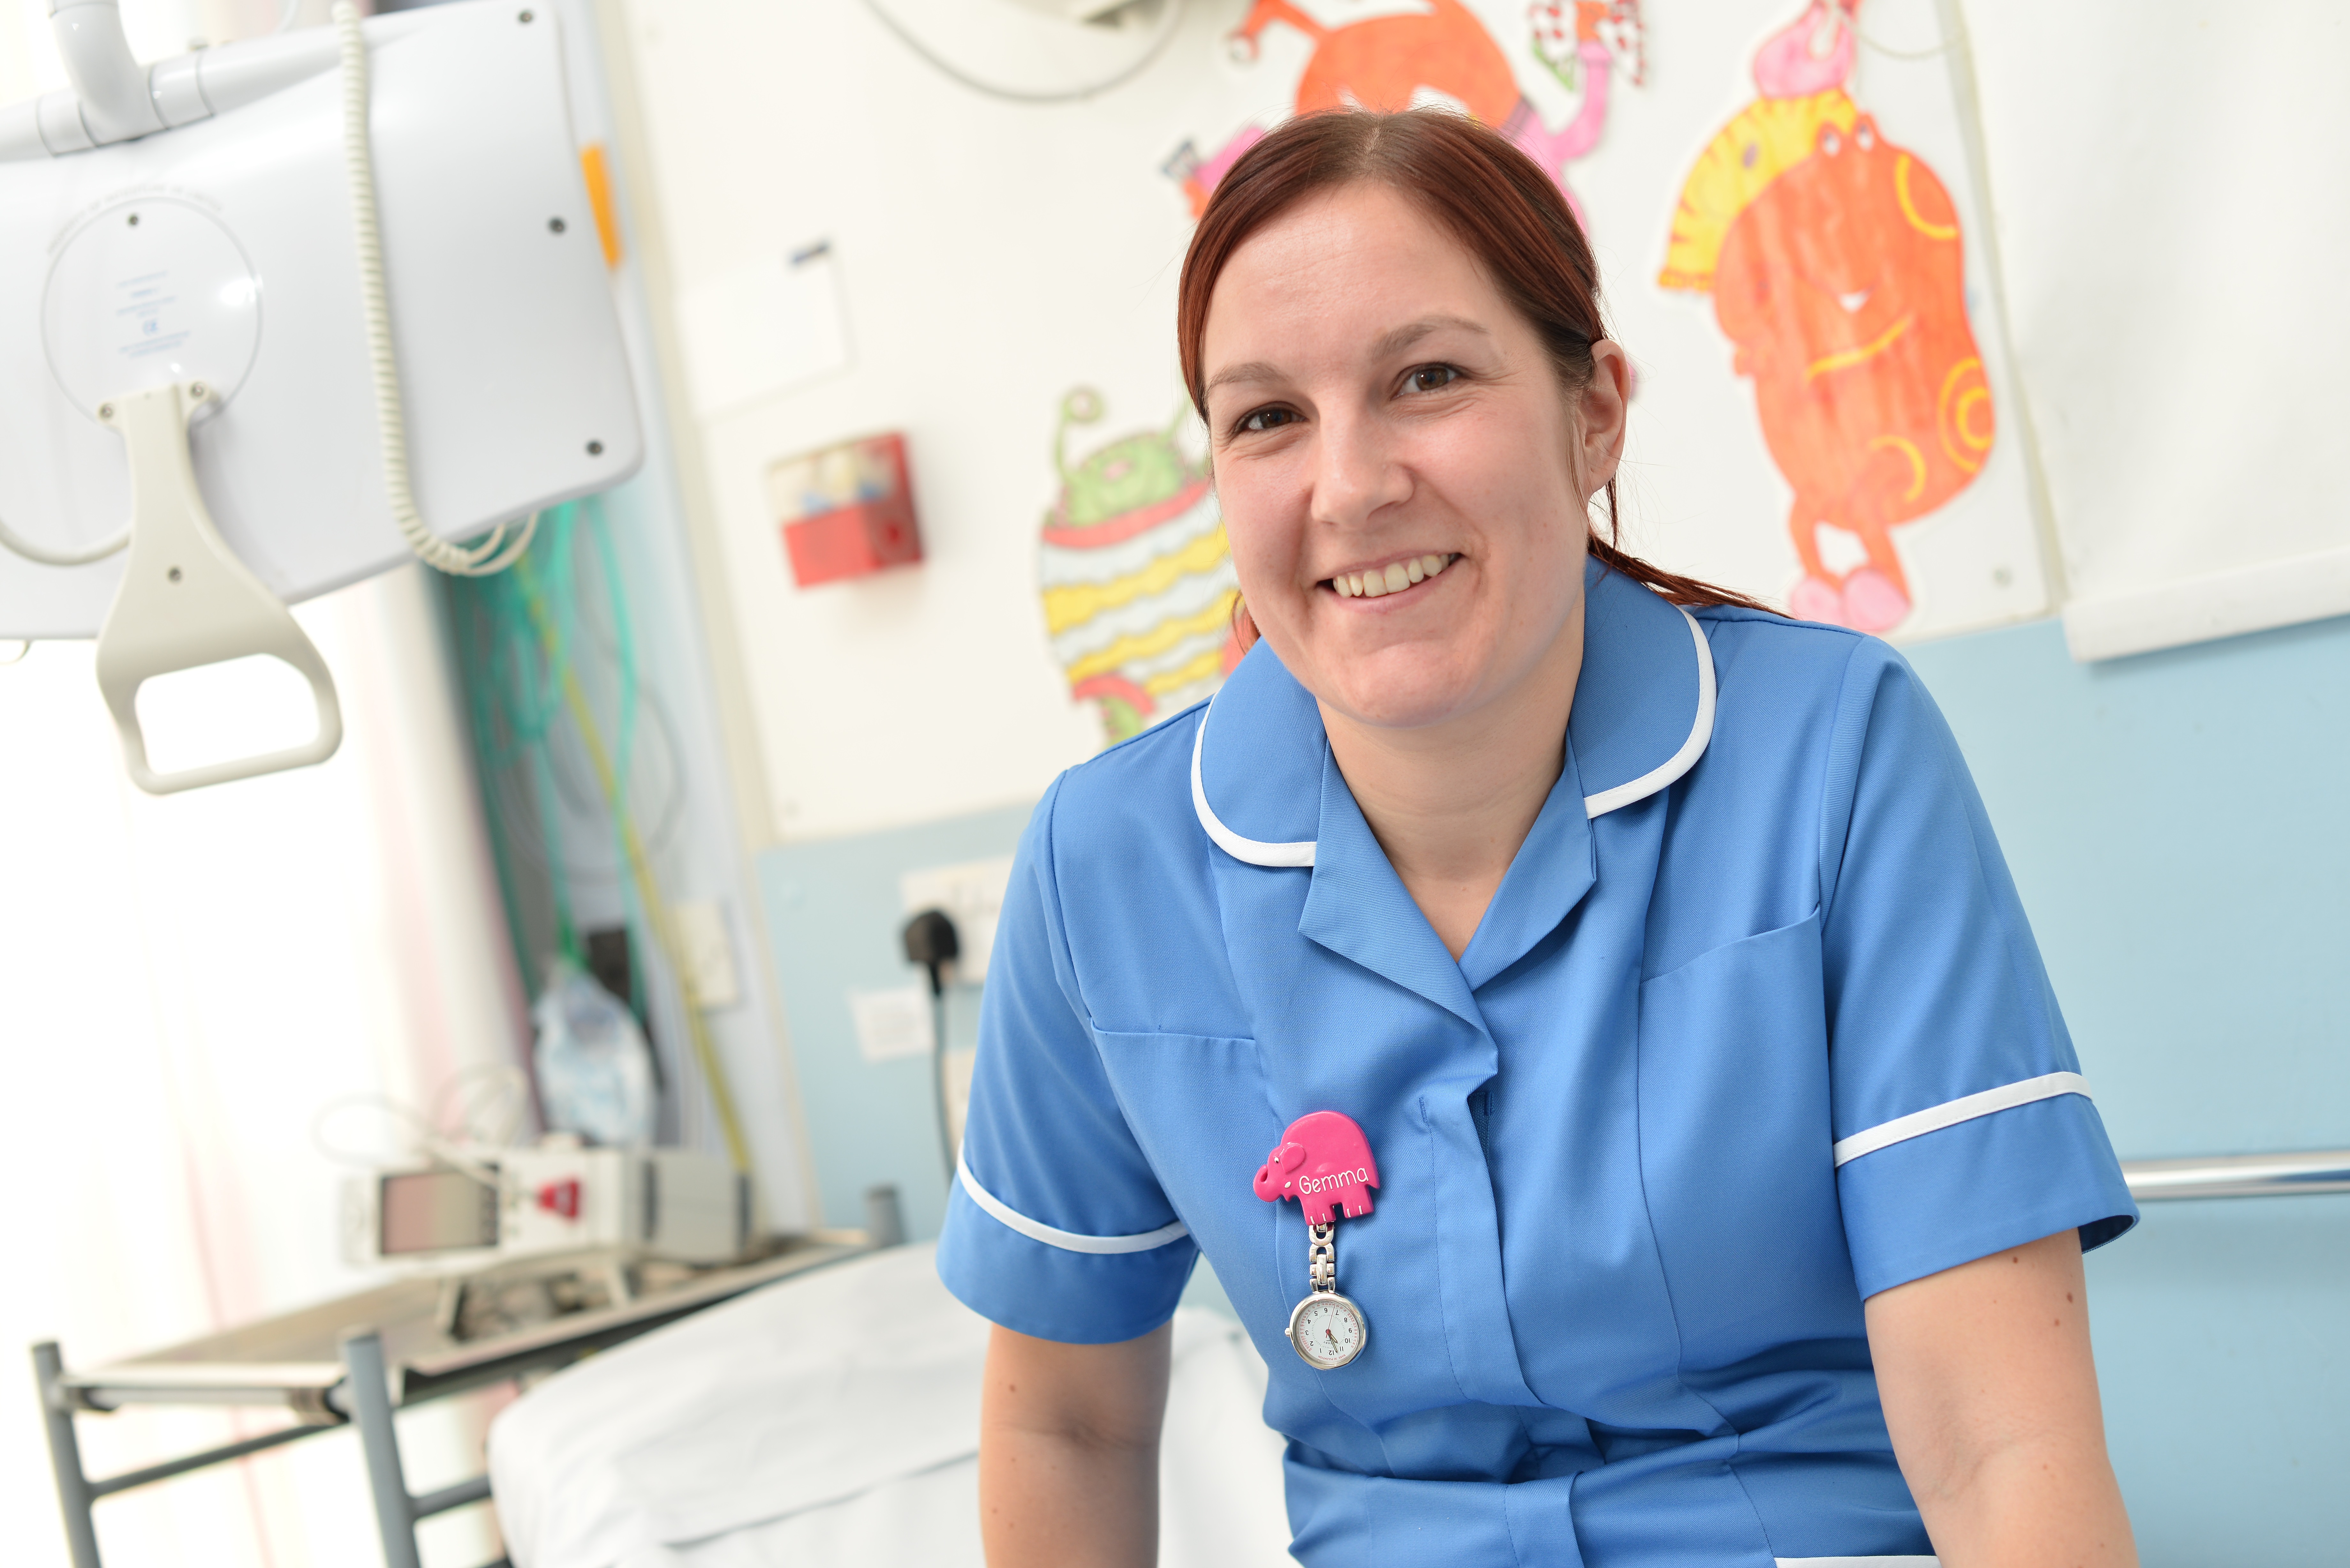 Nursery nurse jobs in southport uk